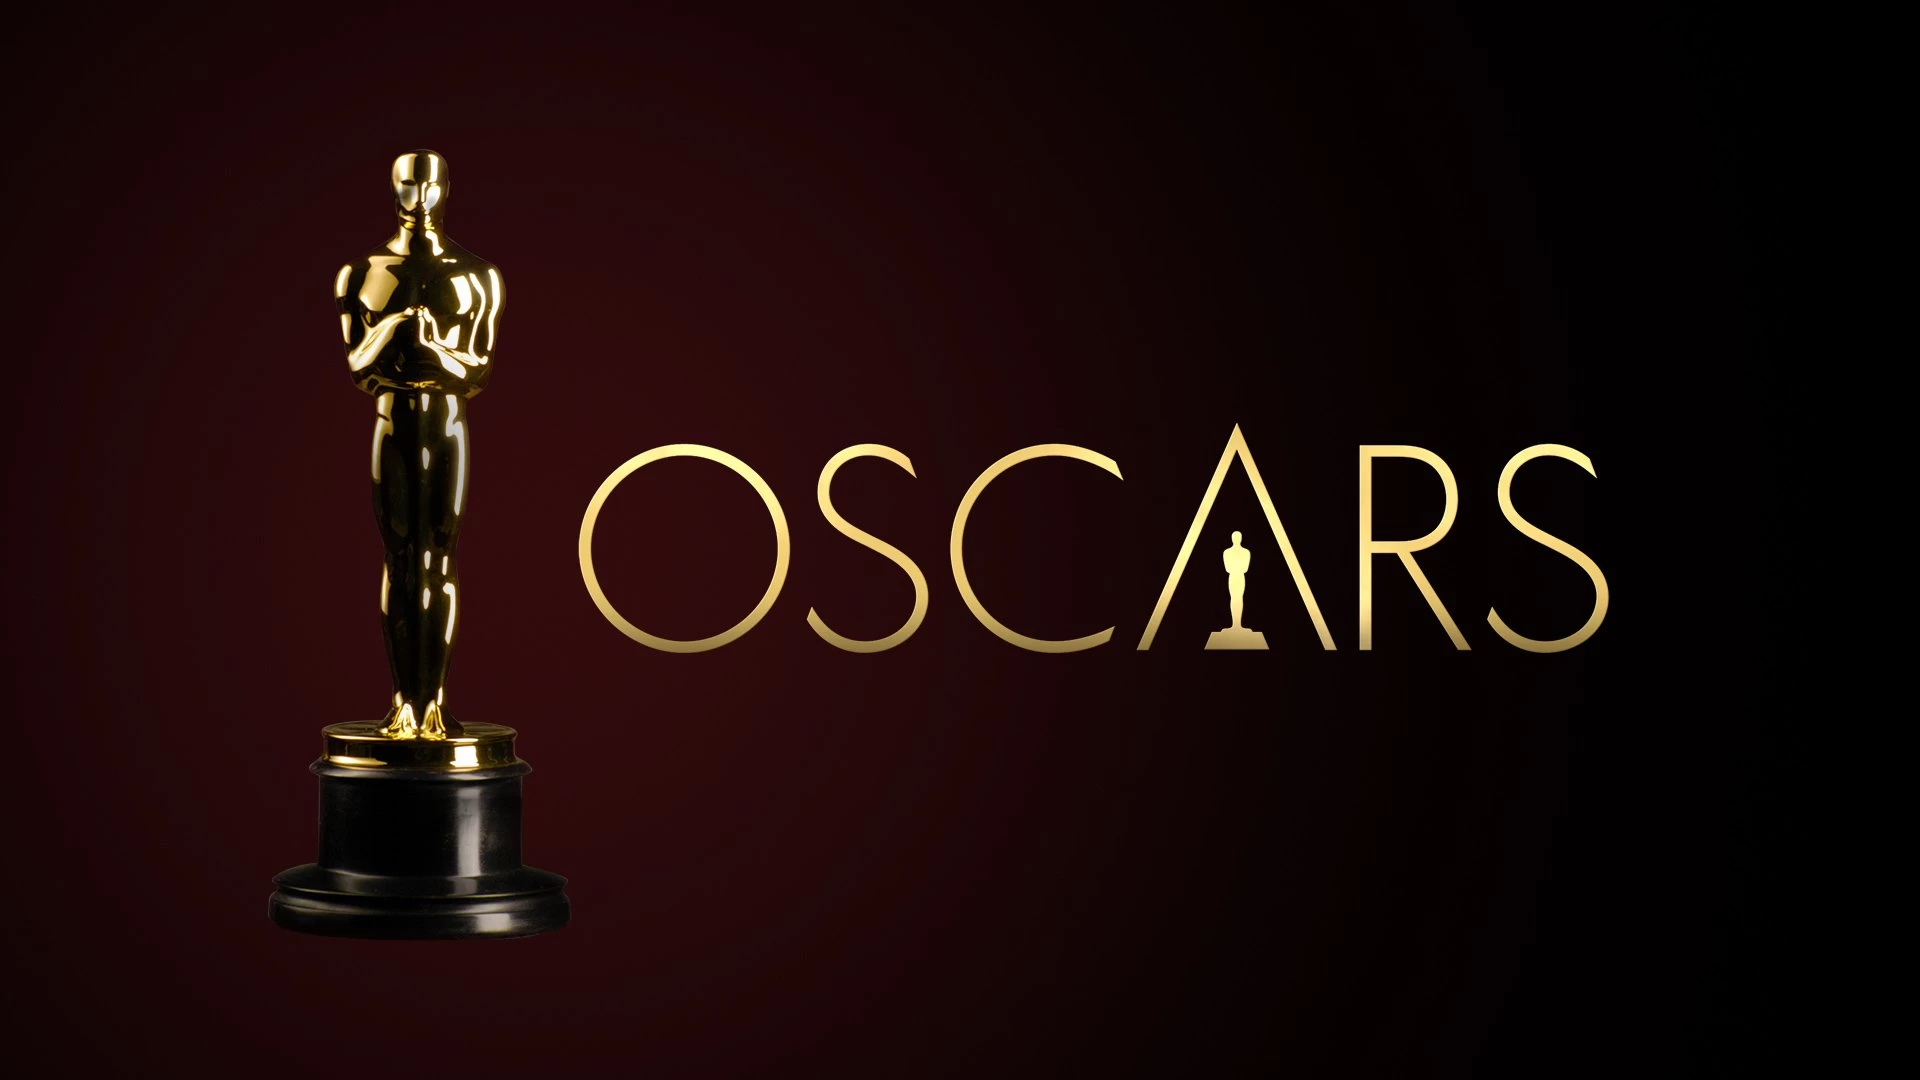 Oscar winners 2021: full list of the 93rd academy awards winners